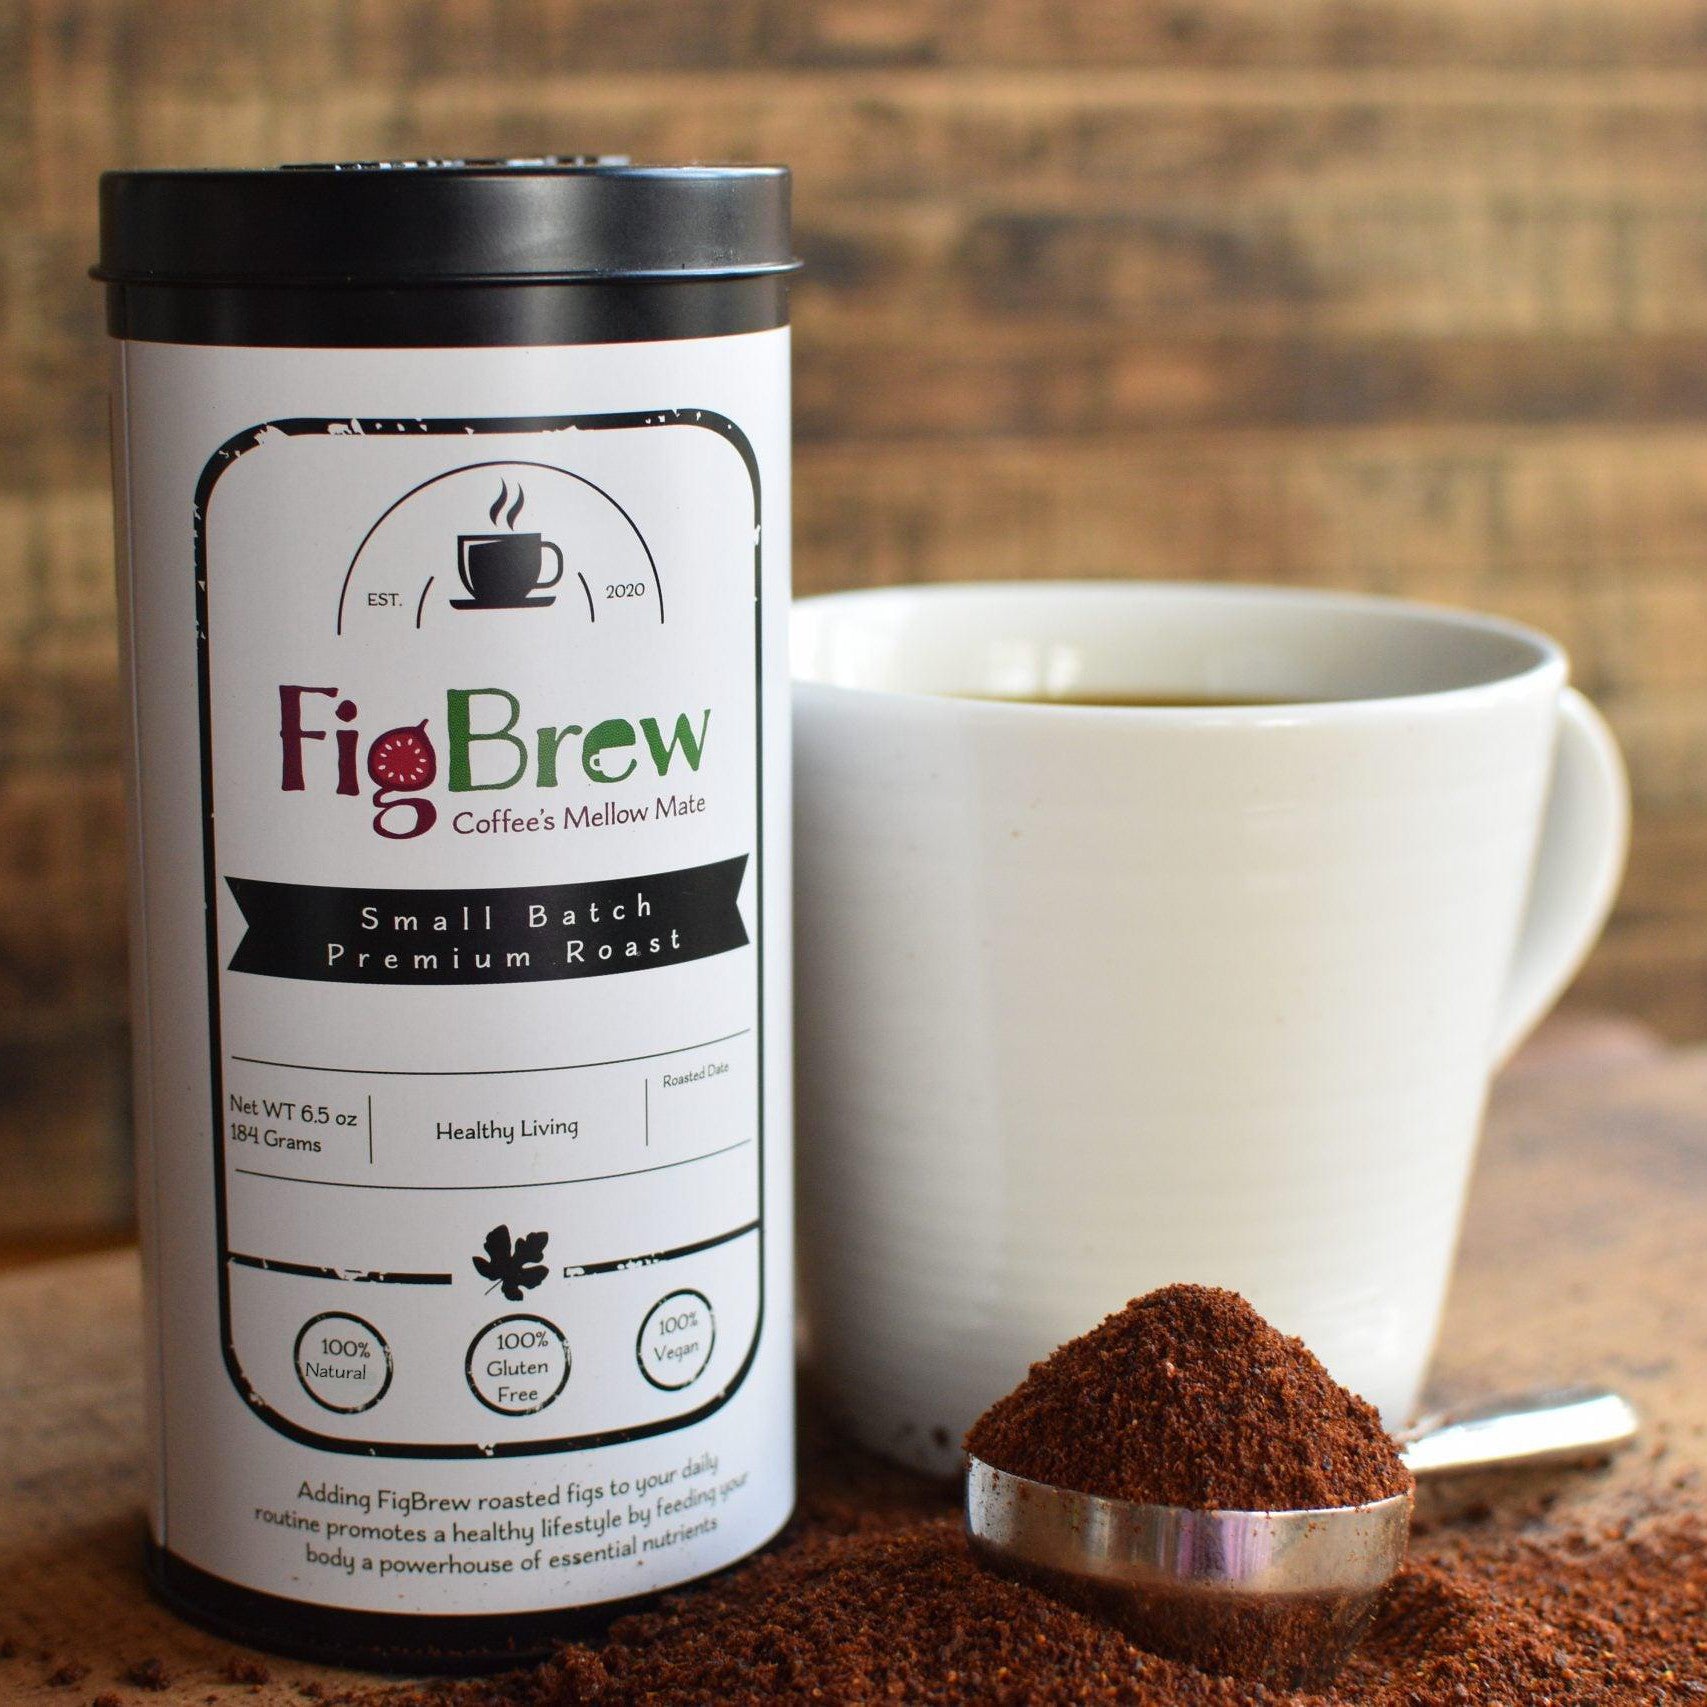 FigBrew Mellow Mix and coffee mug